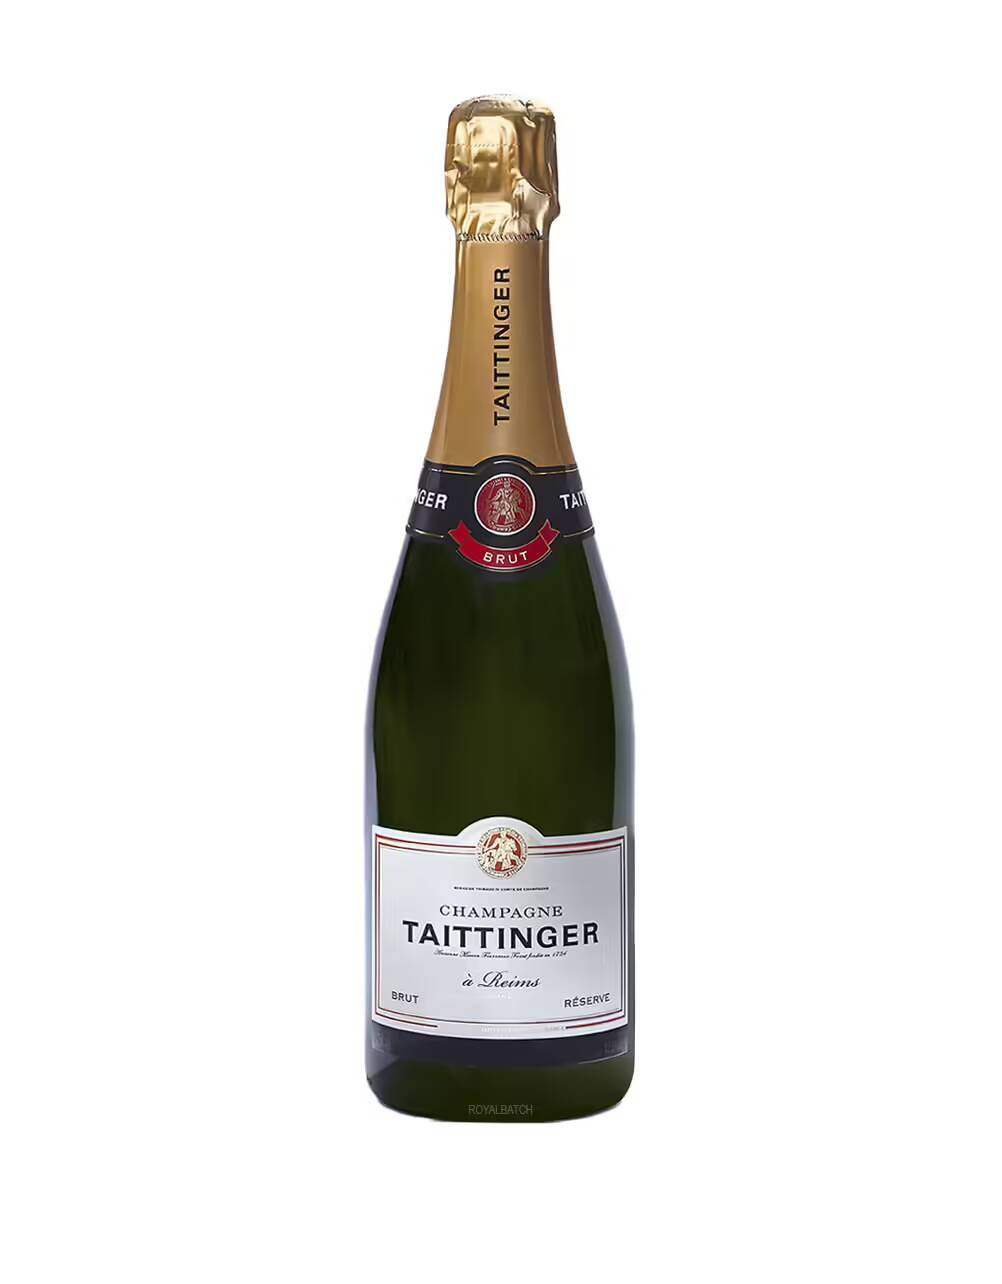 Taittinger Reserve Brut Champagne 375ml